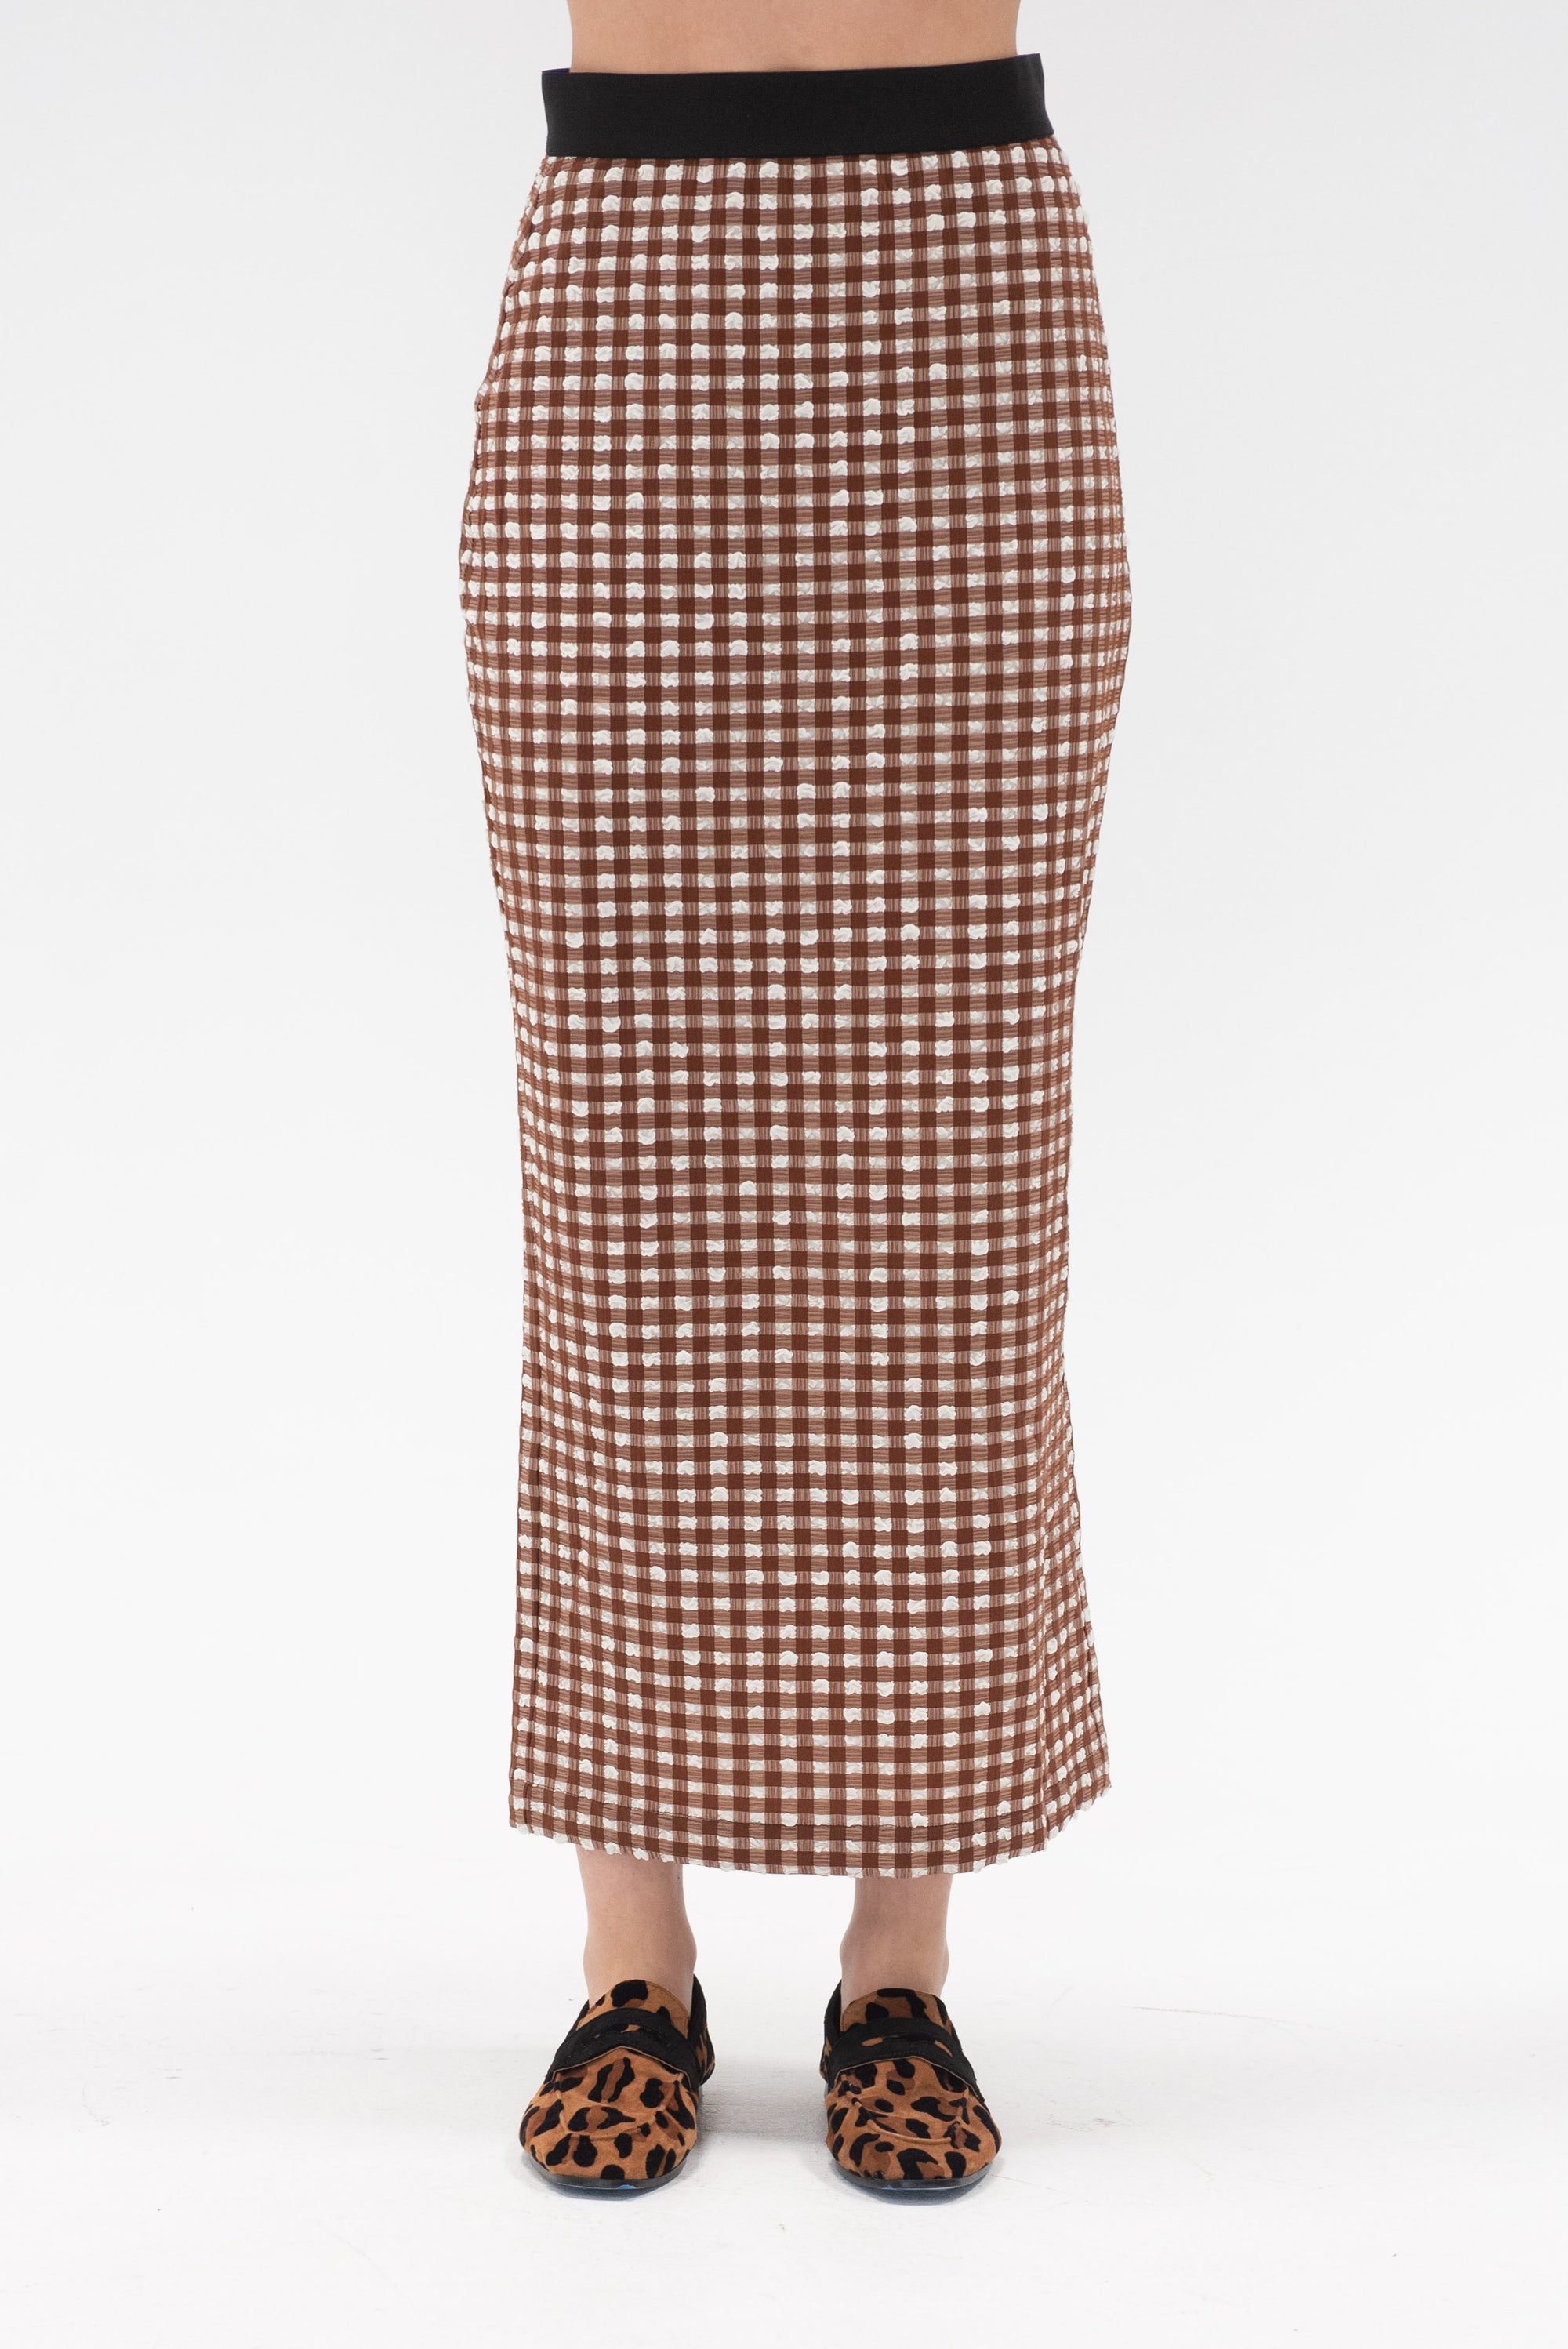 Rachel Comey - Native Skirt, Brown Check